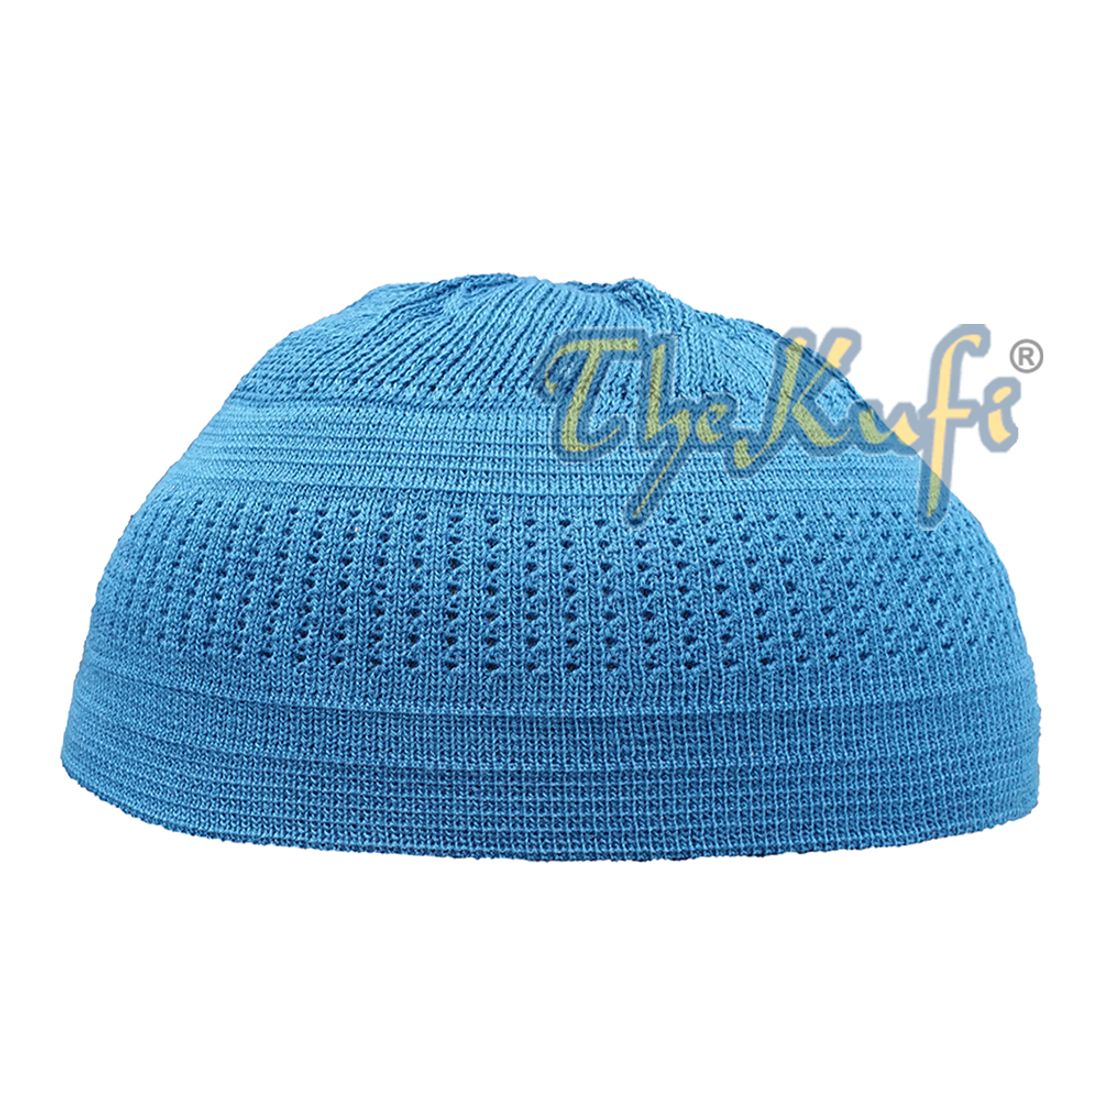 Ekstra Nipis Teal Blue Cotton Stretch-knit Kufi